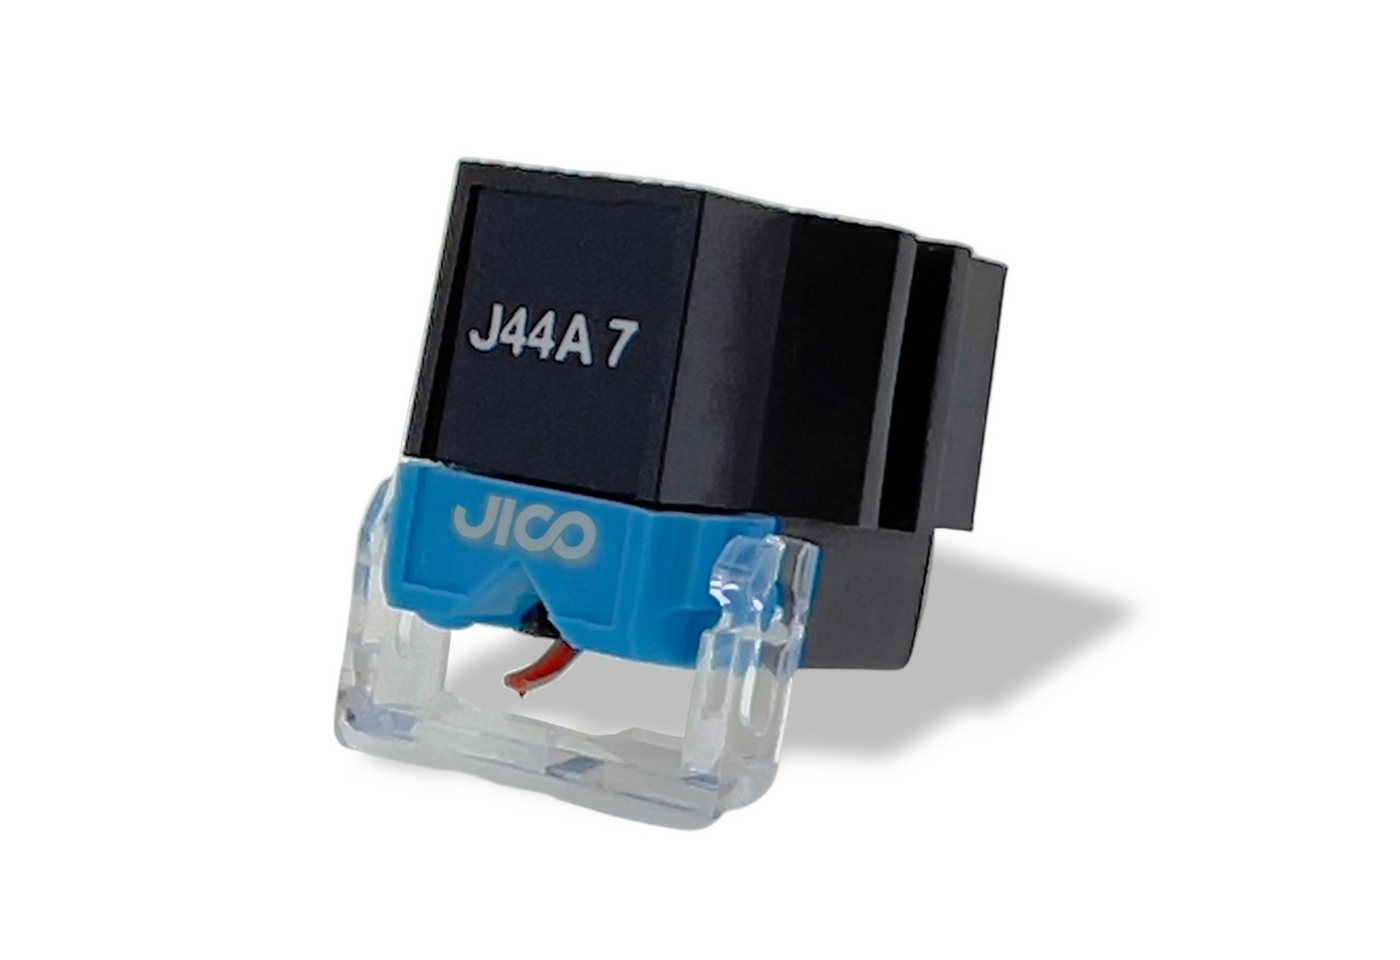 JICO Tonabnehmer, J44A 7 DJ IMP SD, Pickup with Stylus - Concorde Single Tonabnehmer S von JICO